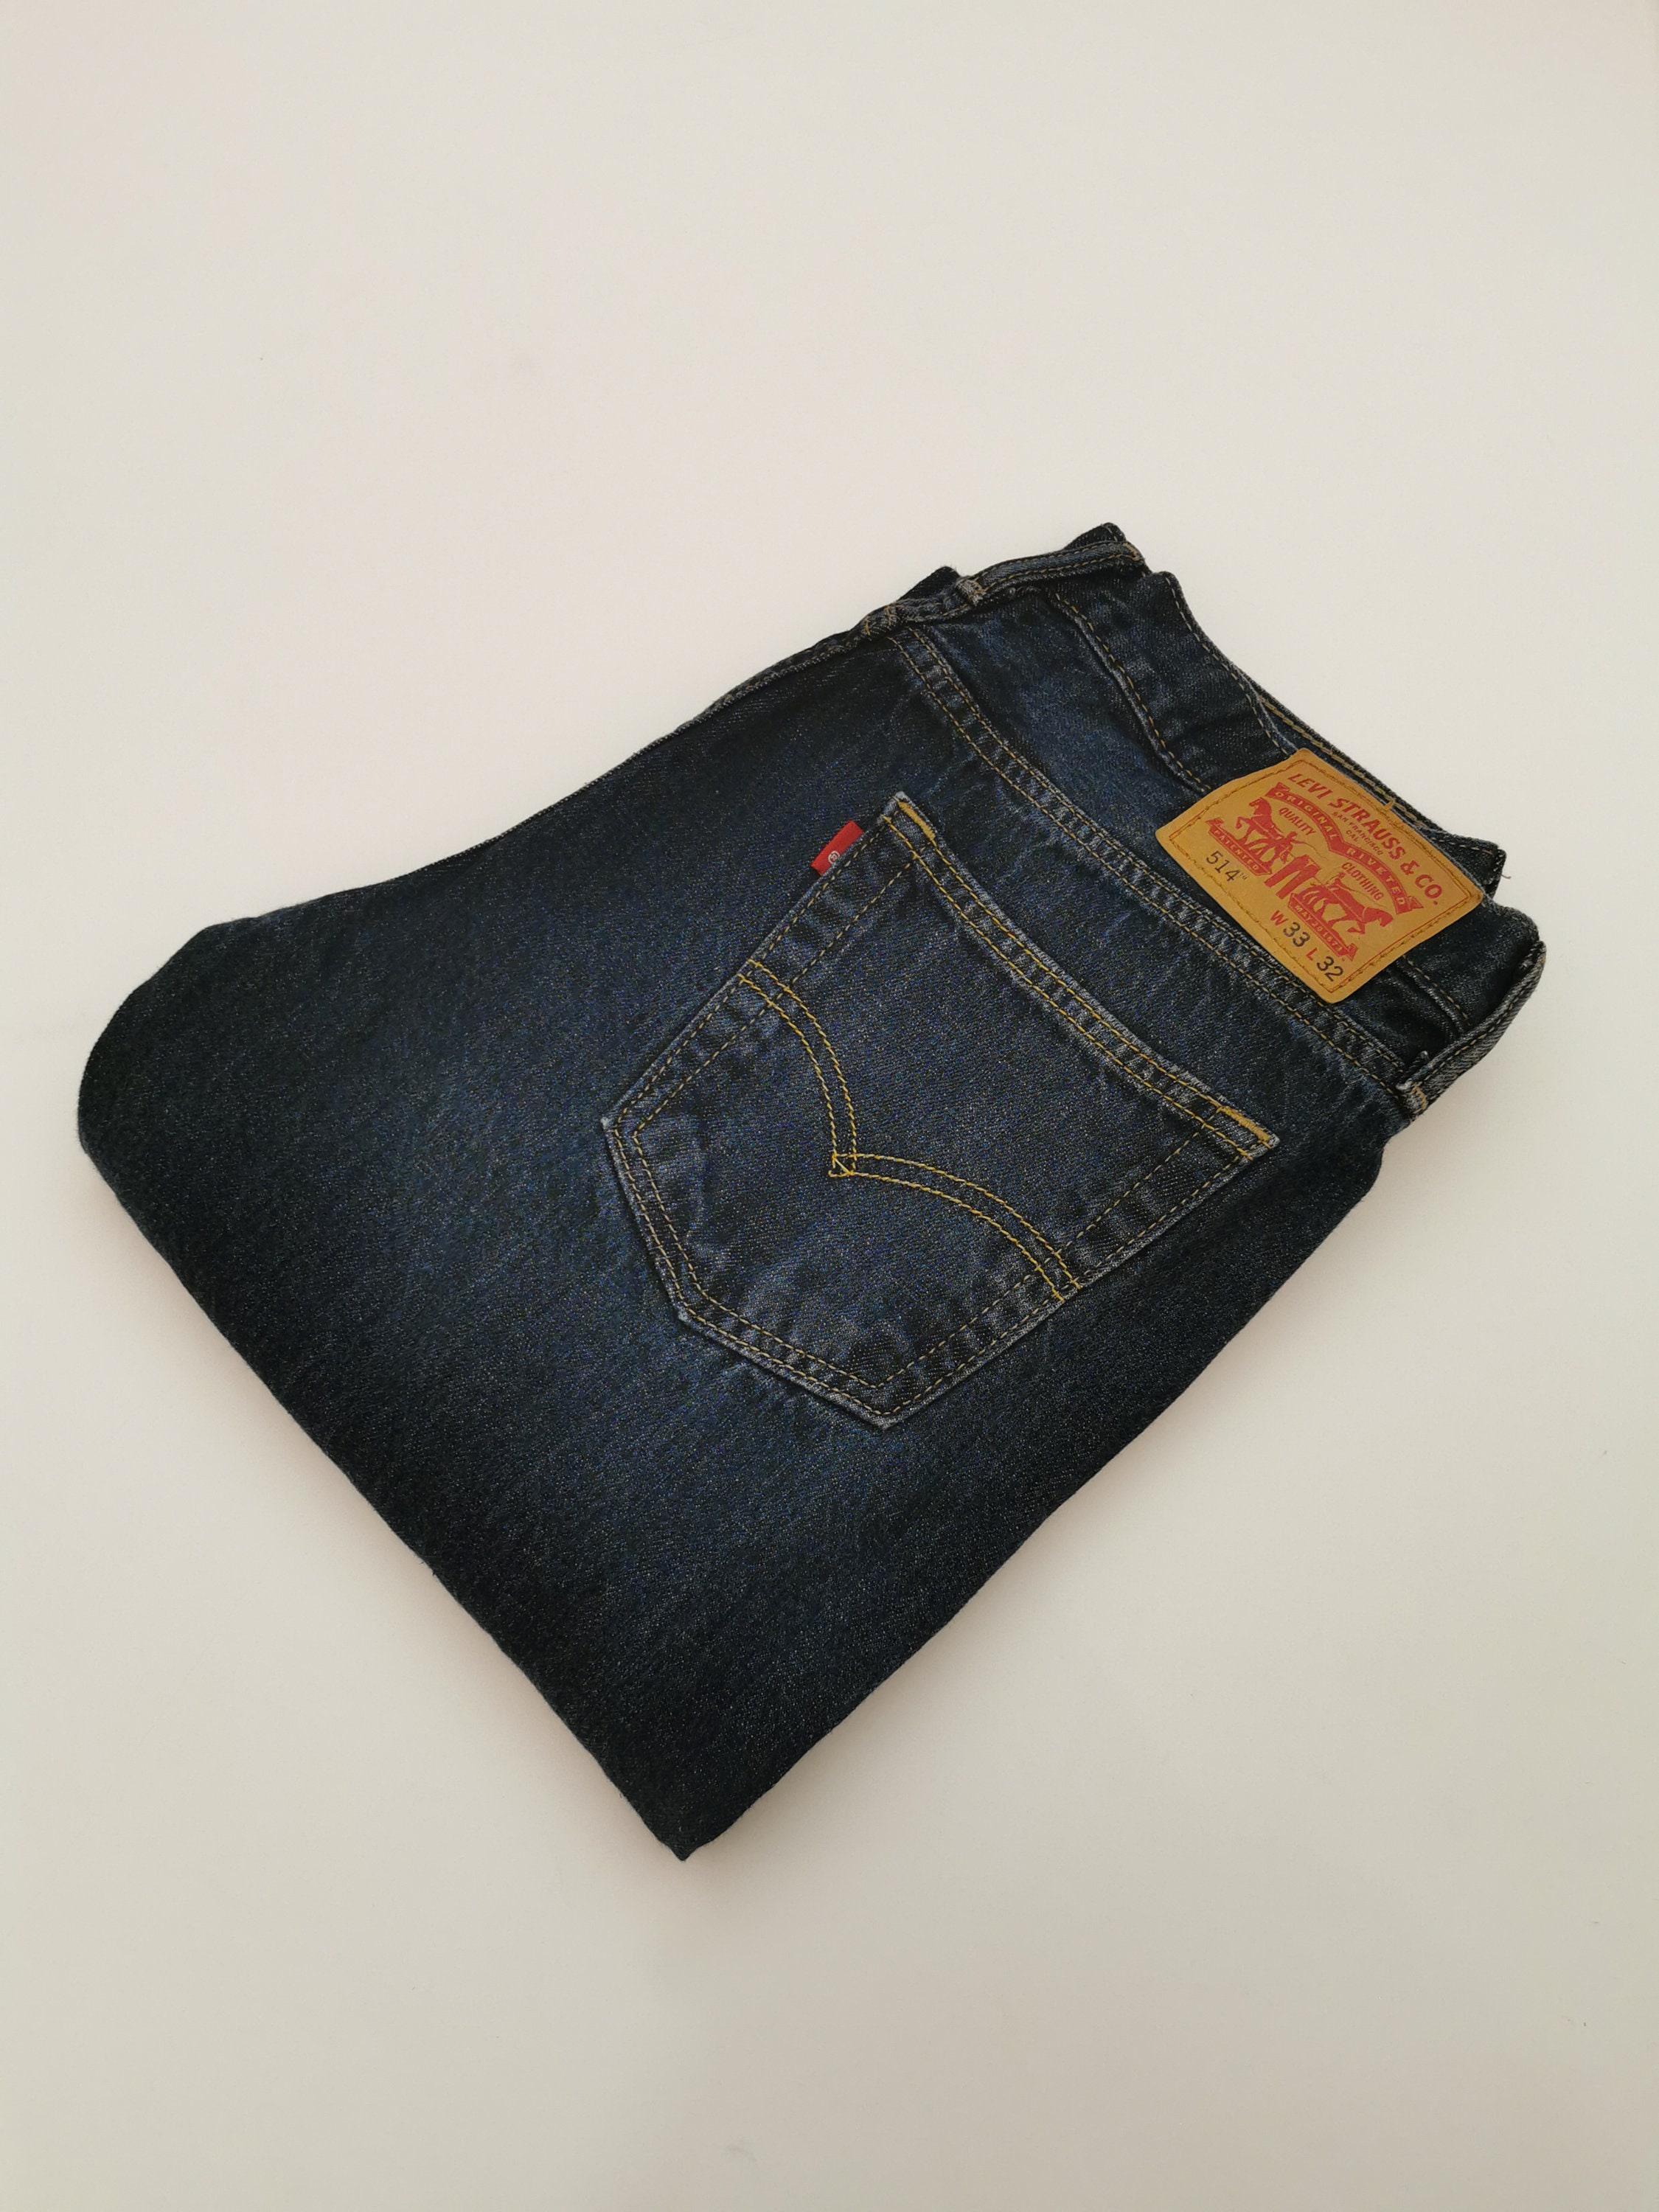 Levis 514 33/32 Vintage Classic Dark Stonewashed Jeans Denim - Etsy